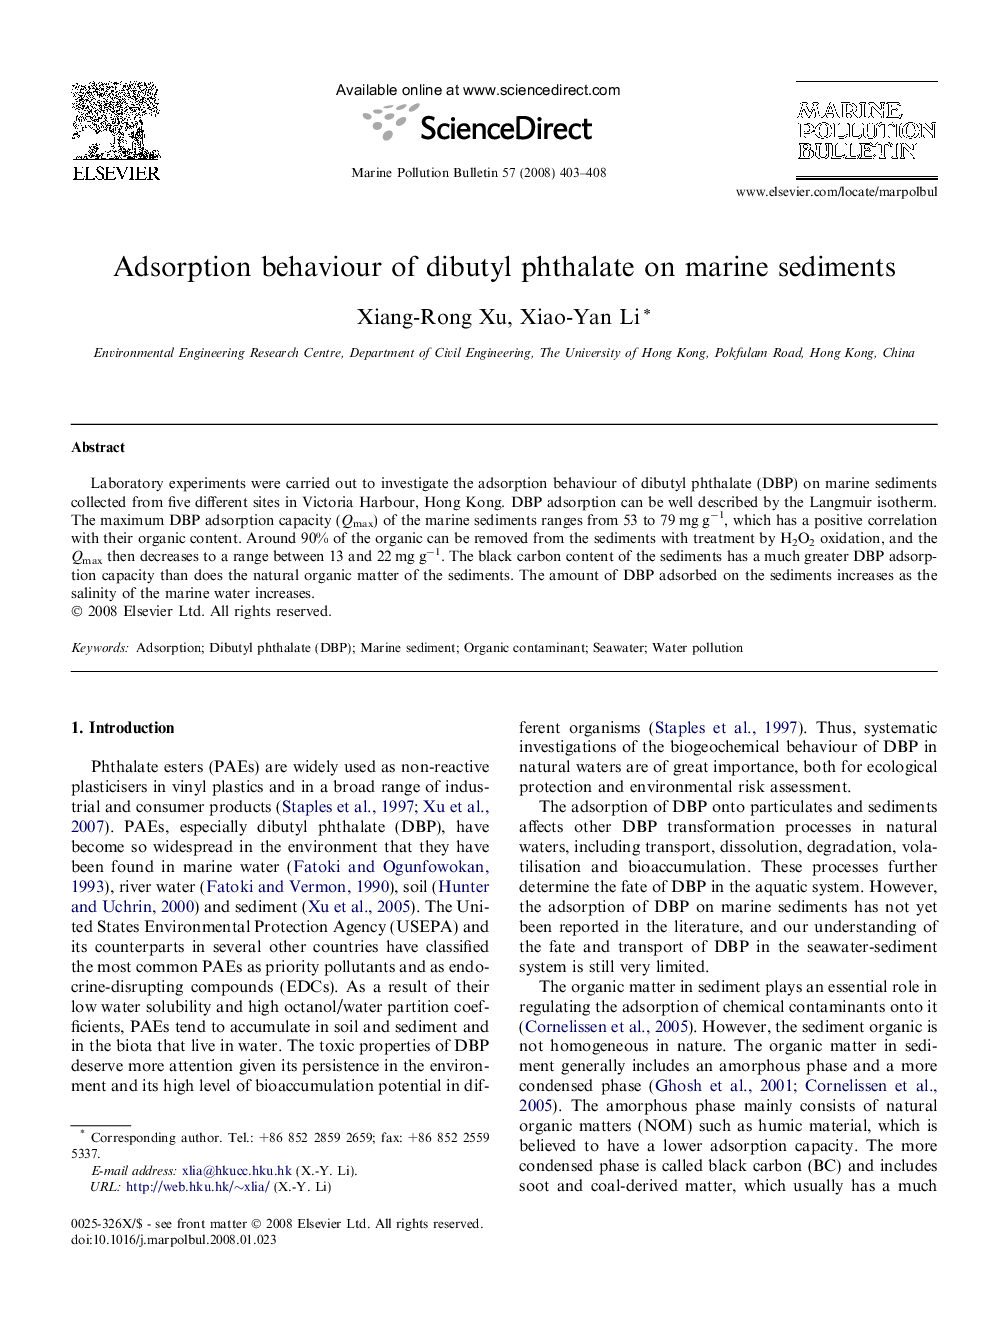 Adsorption behaviour of dibutyl phthalate on marine sediments